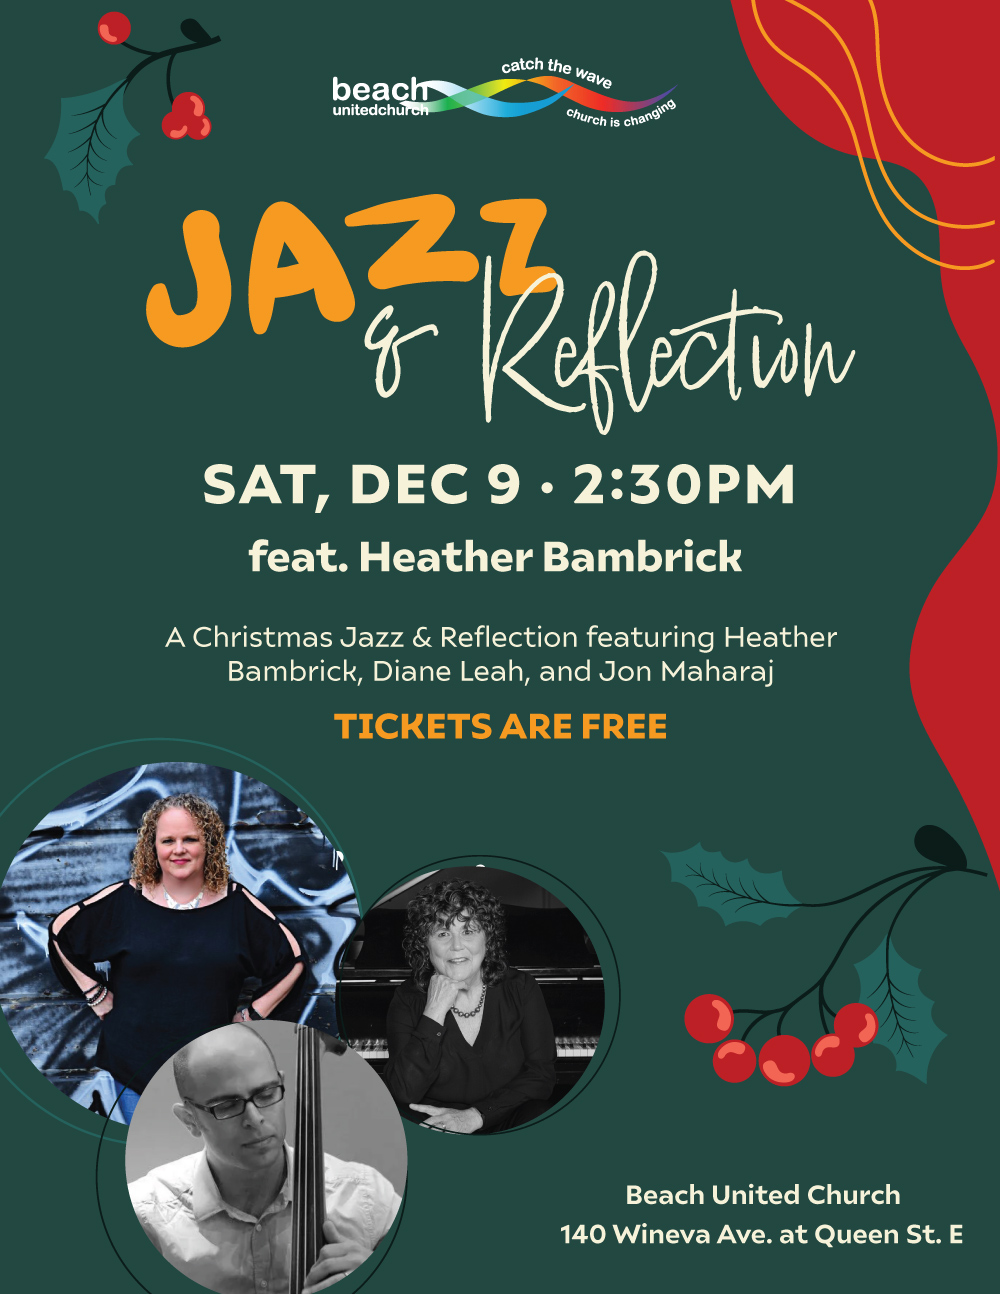 Christmas Jazz & Reflection with Heather Bambrick